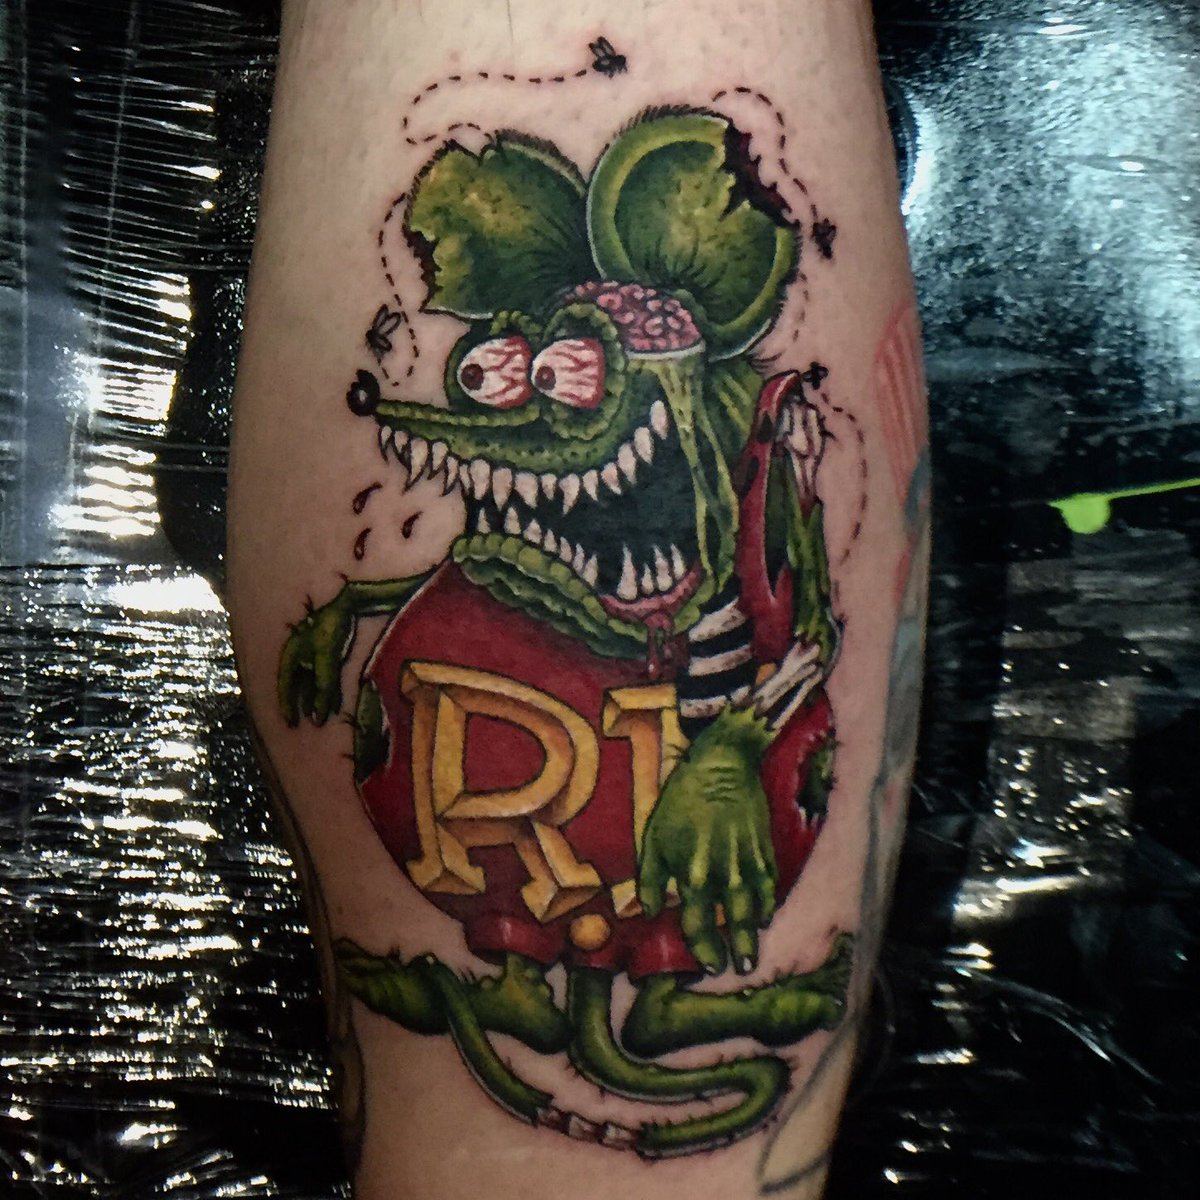 Rat fink inspired corn skater #tattoo #tattoos #beauty in. 